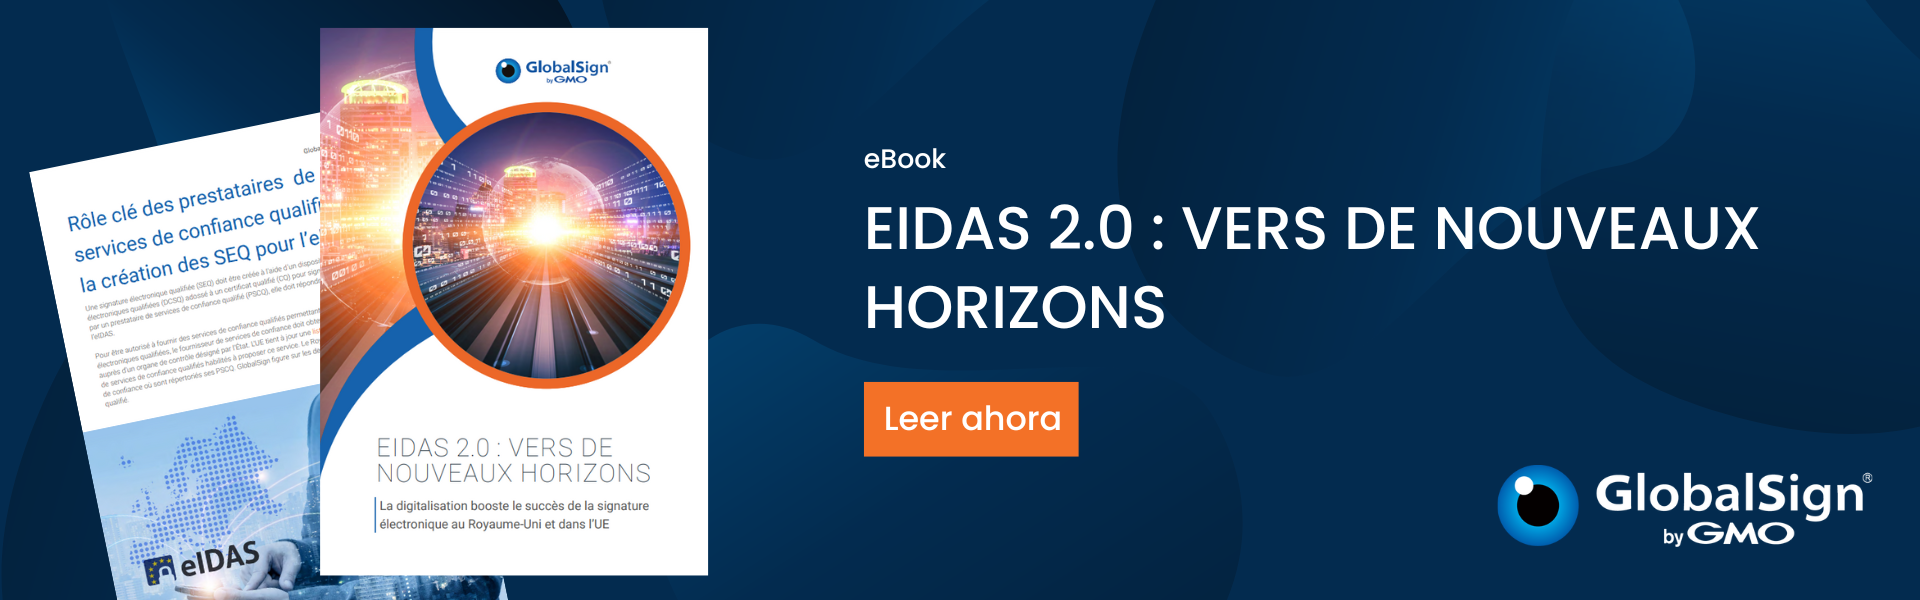 eIDAS 2.0: Innovations on the Horizon eBook